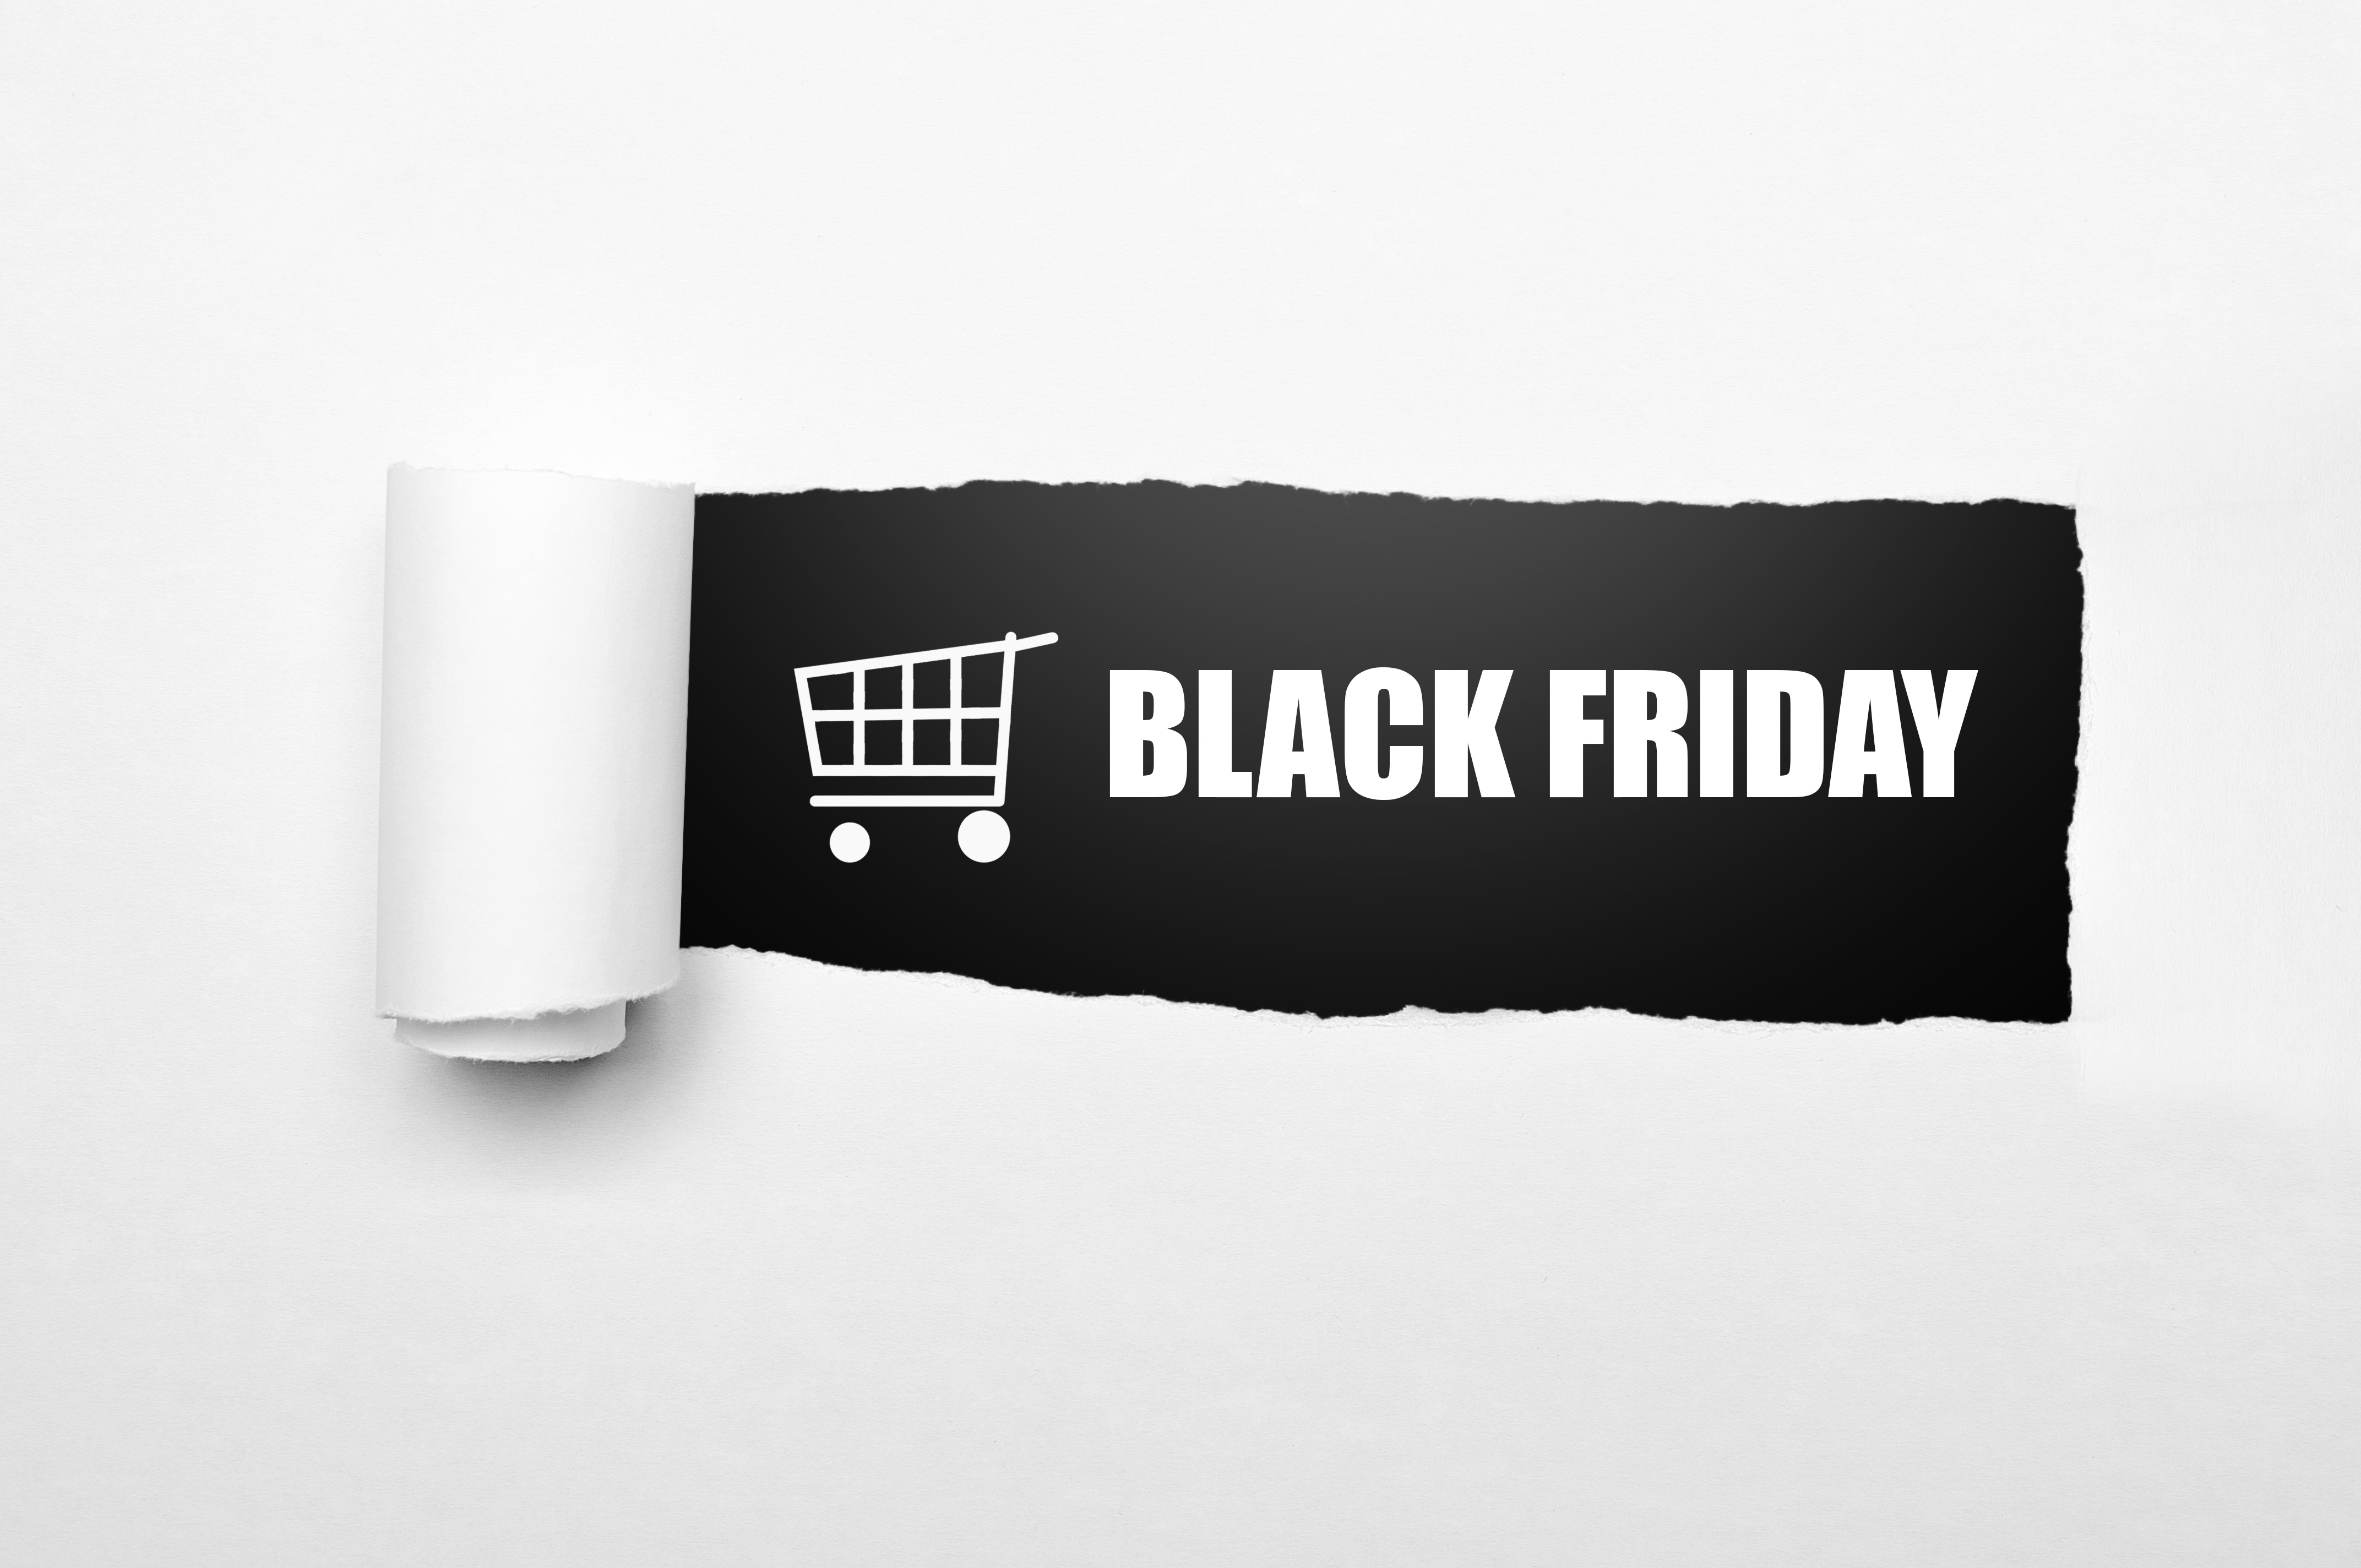 Goodbye Trademark: Free ‘Black Friday’ Usage In Germany